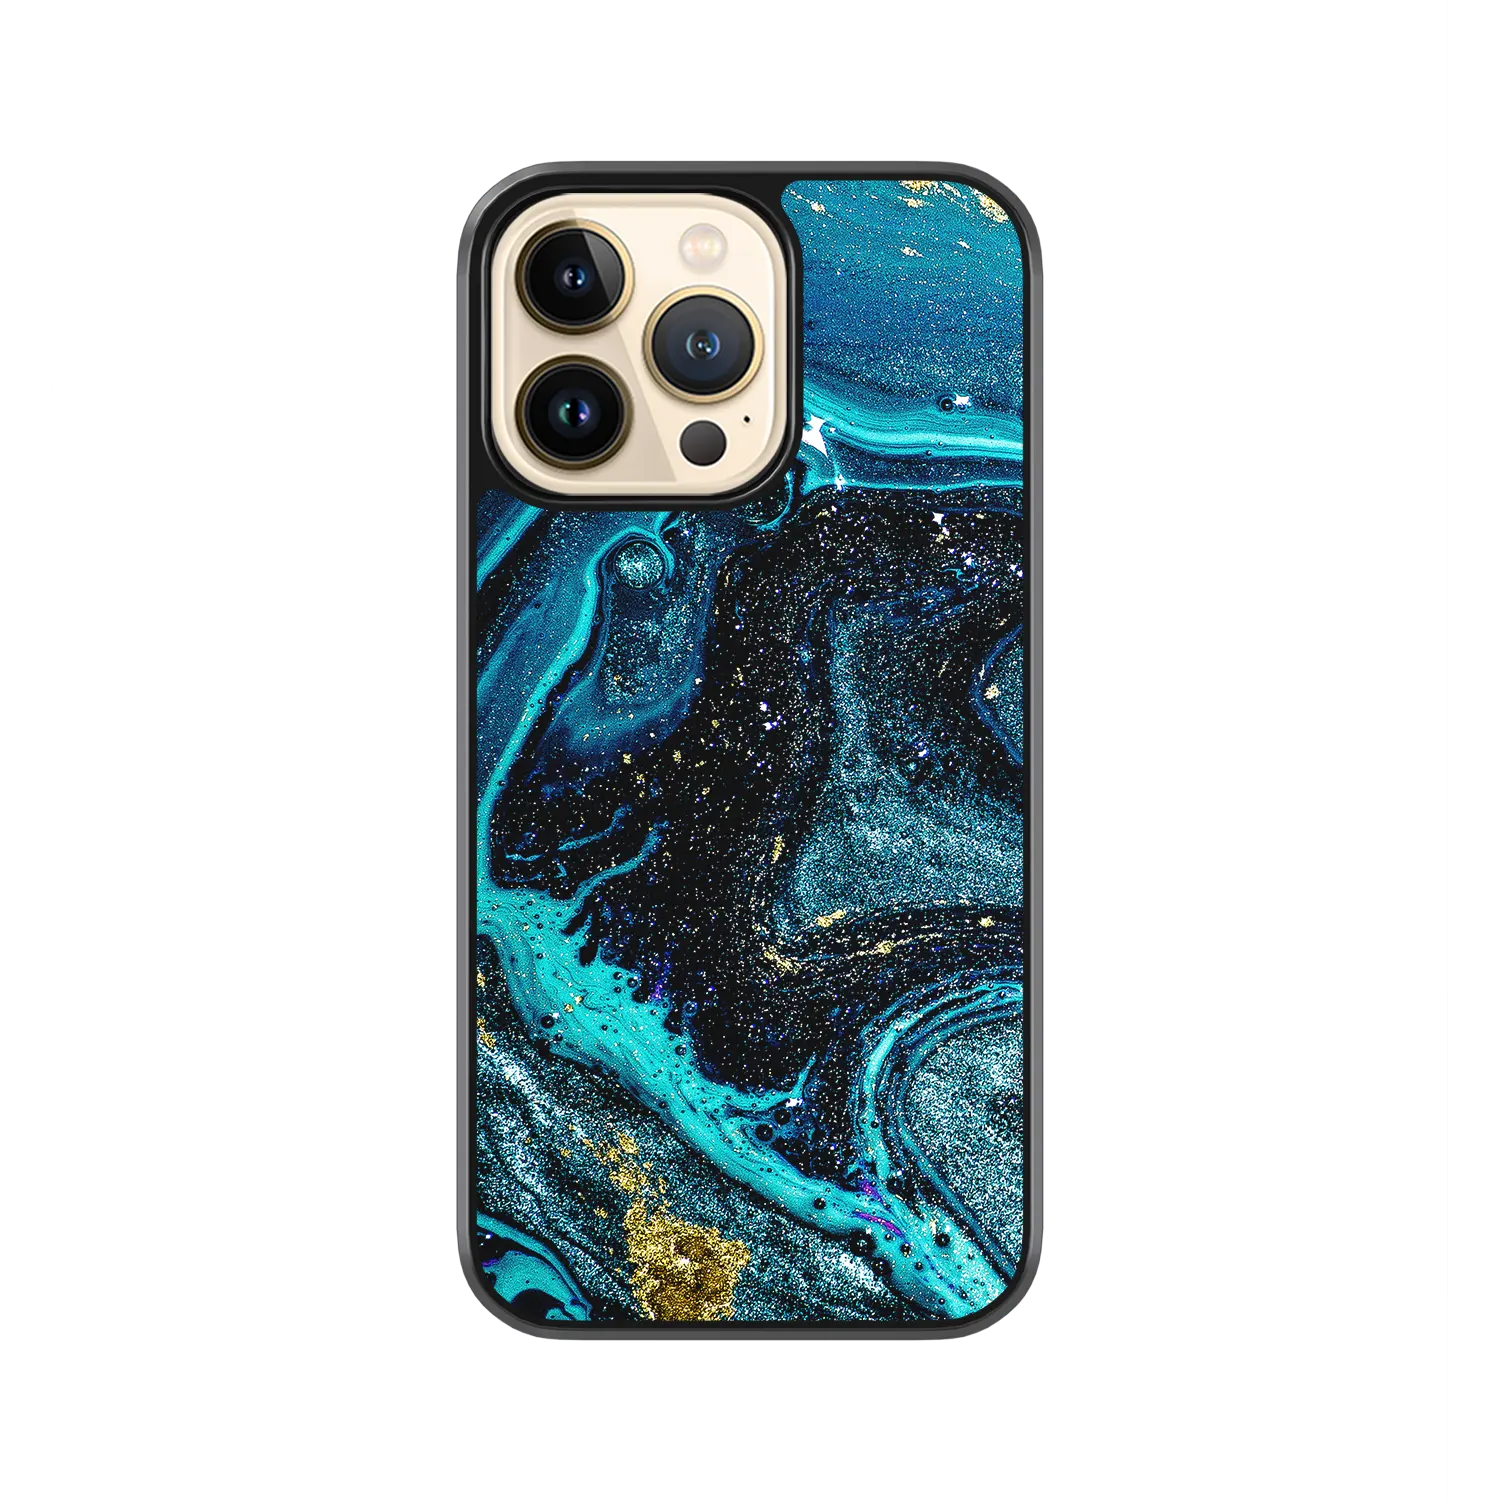 Poseidon iphone 14 pro max cover